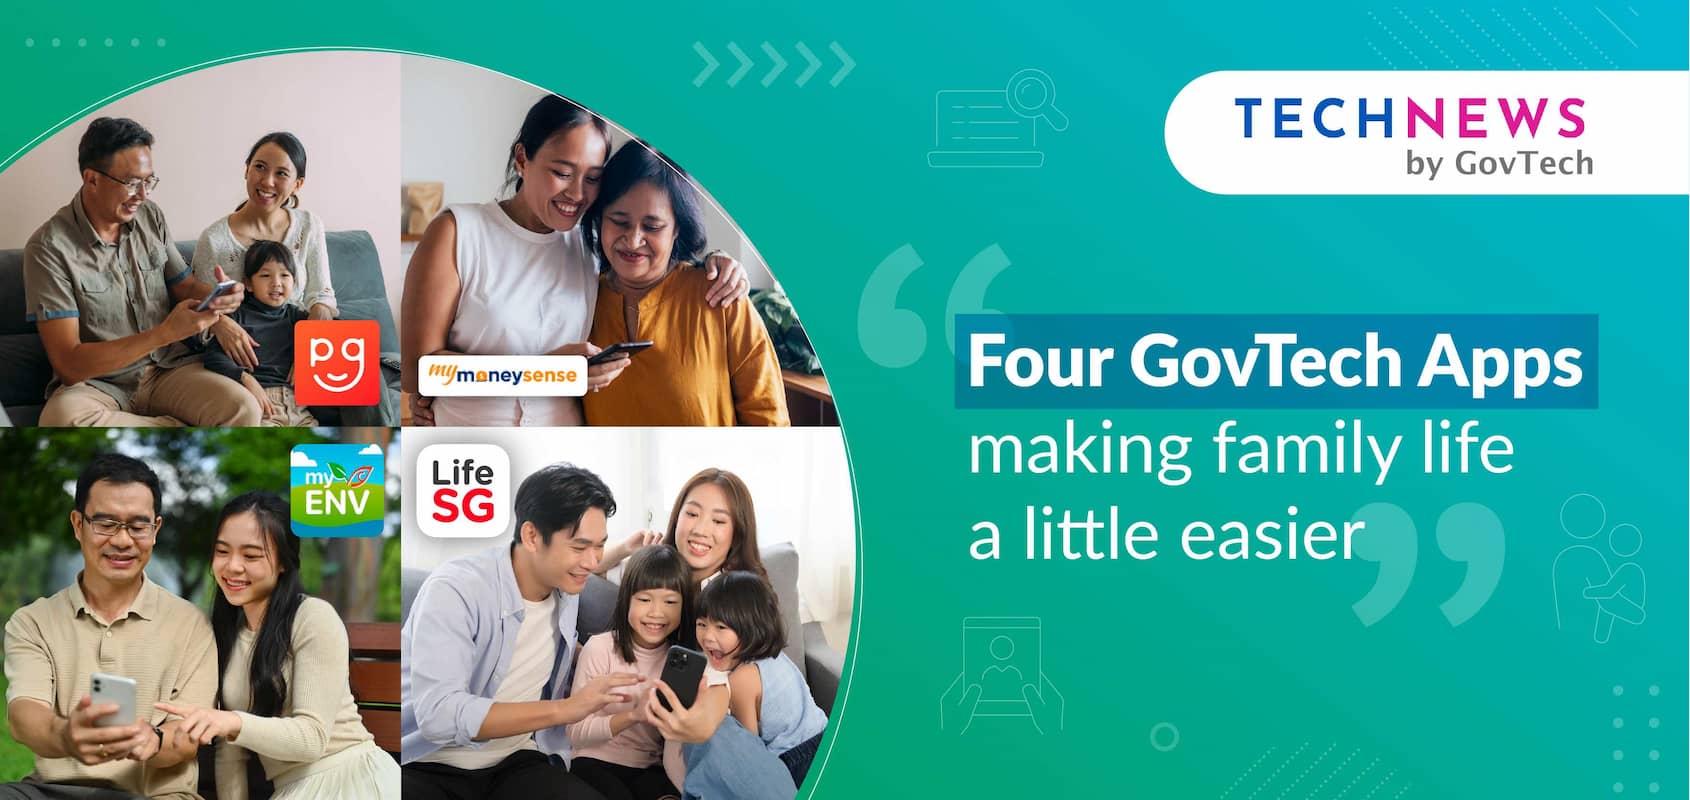 GovTech apps: LifeSG, MyMoneySense, MyENV, NLBMobile, Parents Gateway to help make family life easy